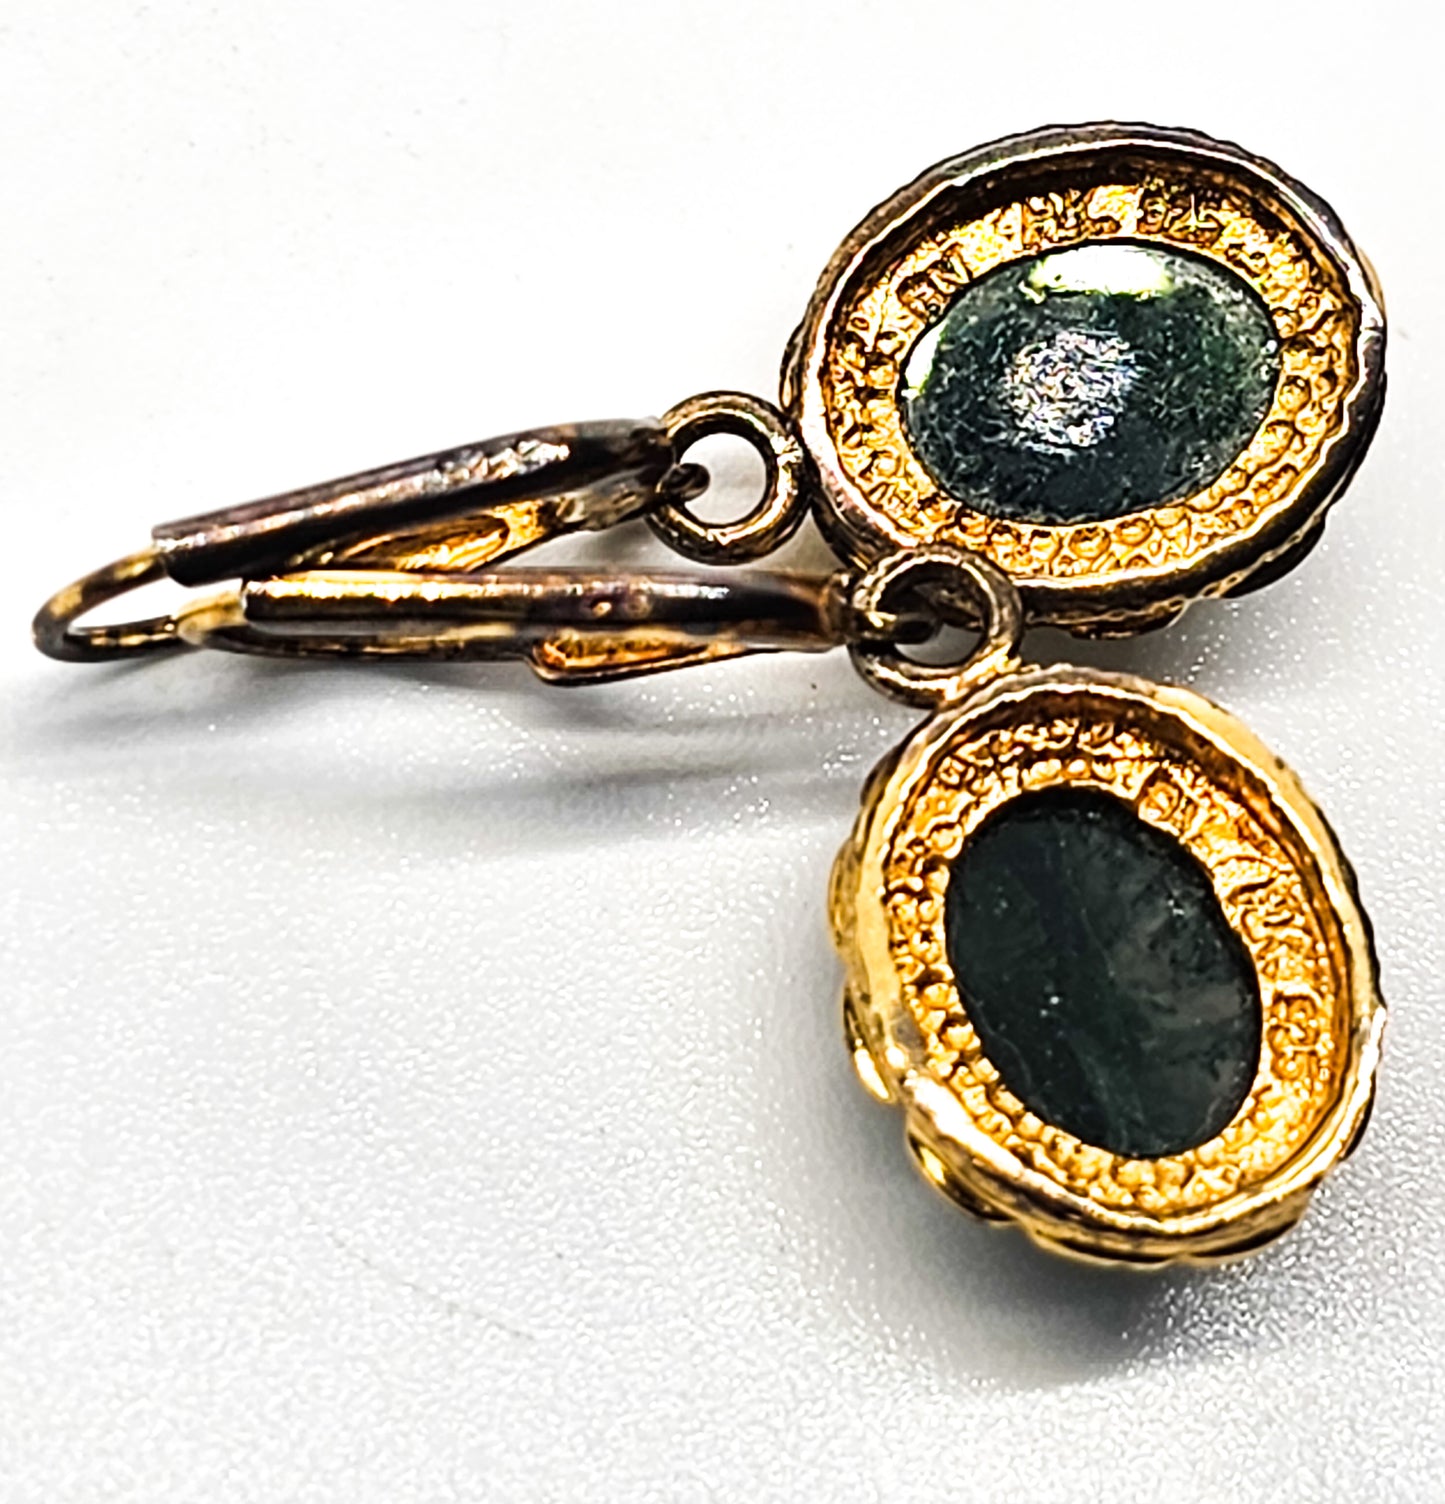 Moss Agate vermeil gold over sterling silver vintage drop earrings